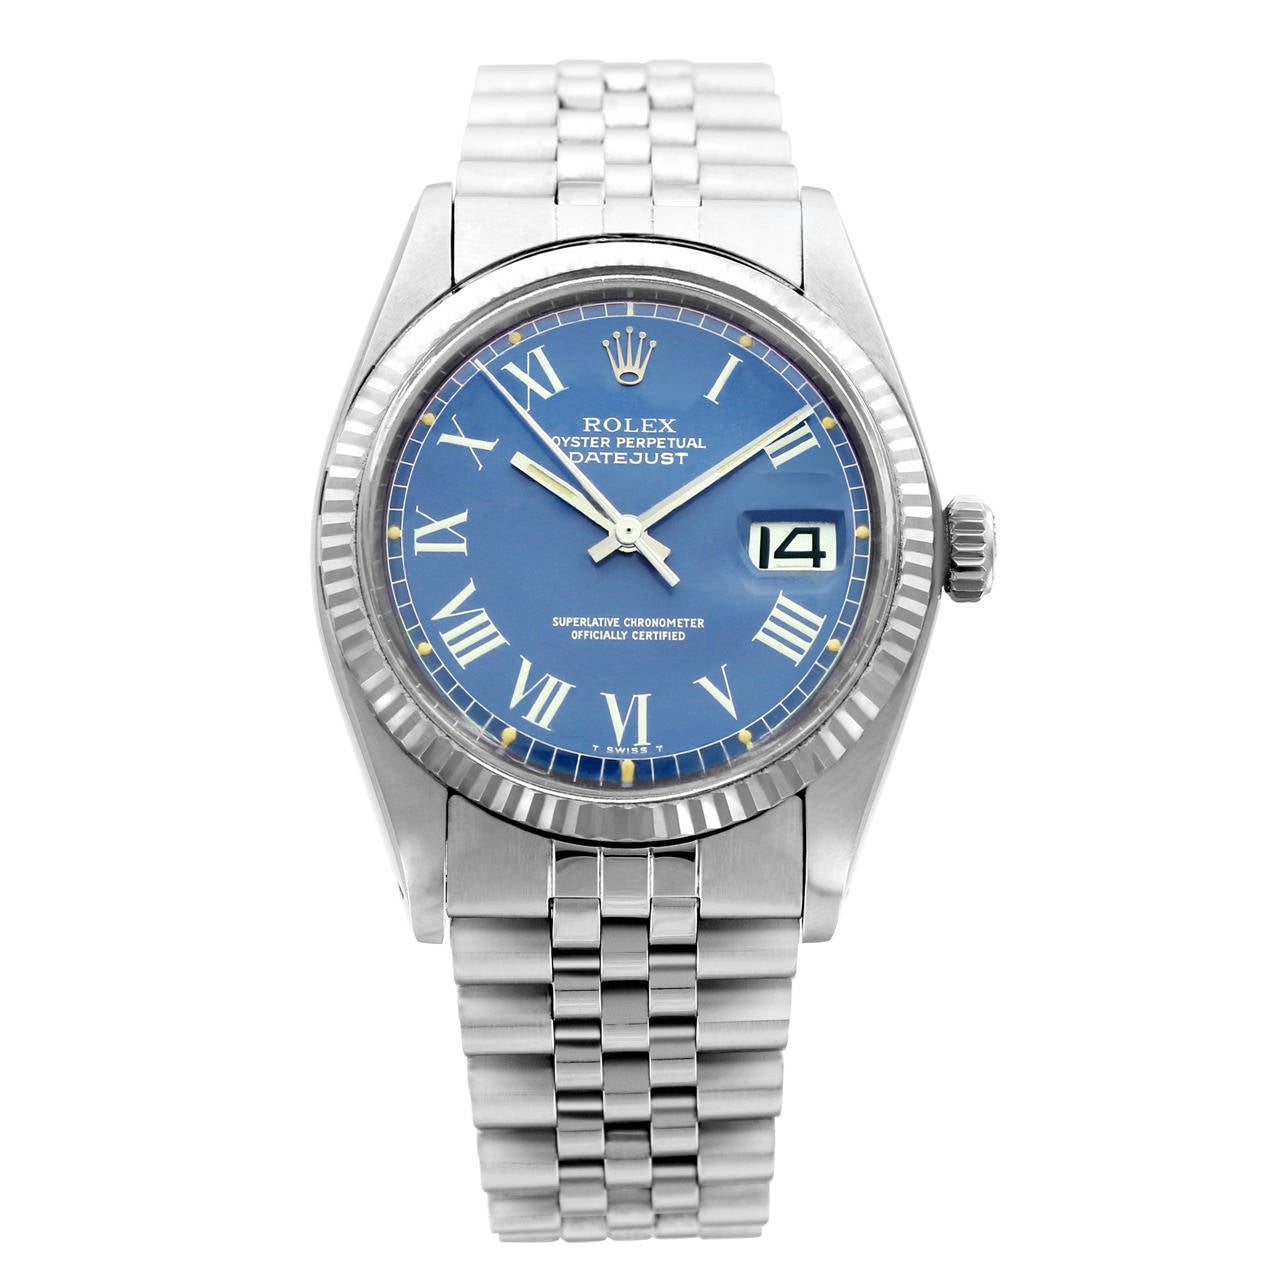 Rolex Stainless Steel Datejust Chronometer Wristwatch